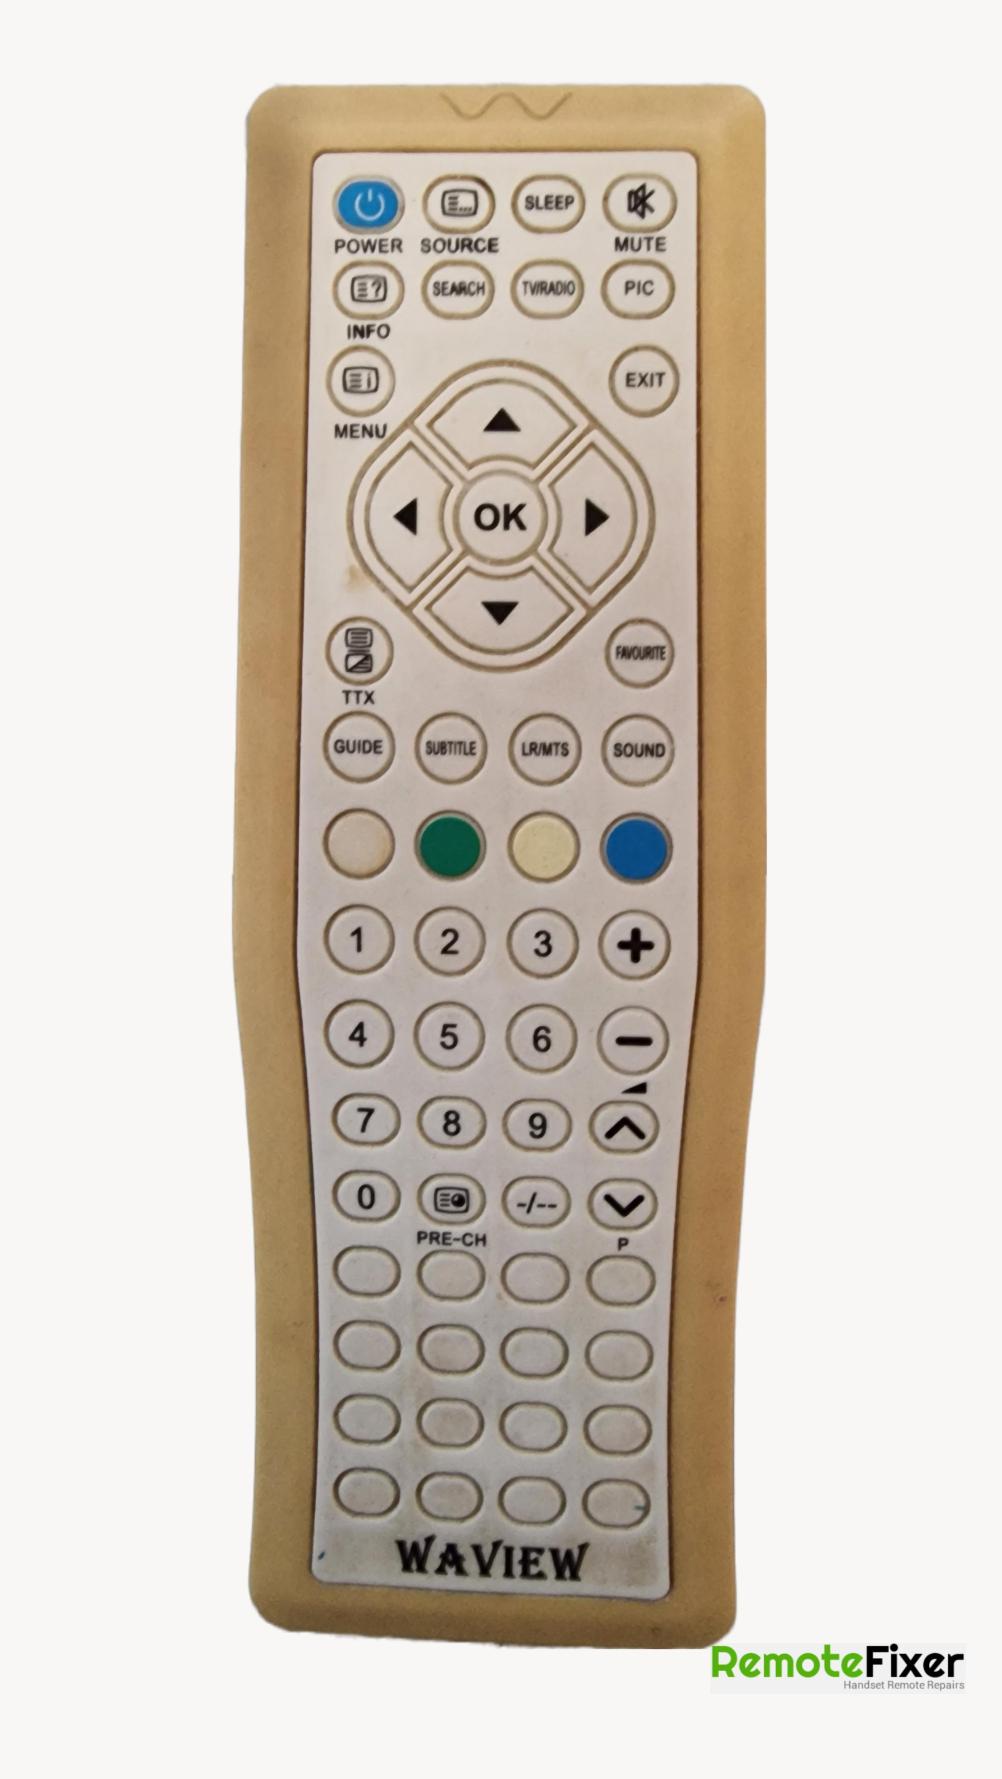 Waview Bathroom TV Remote Control - Front Image